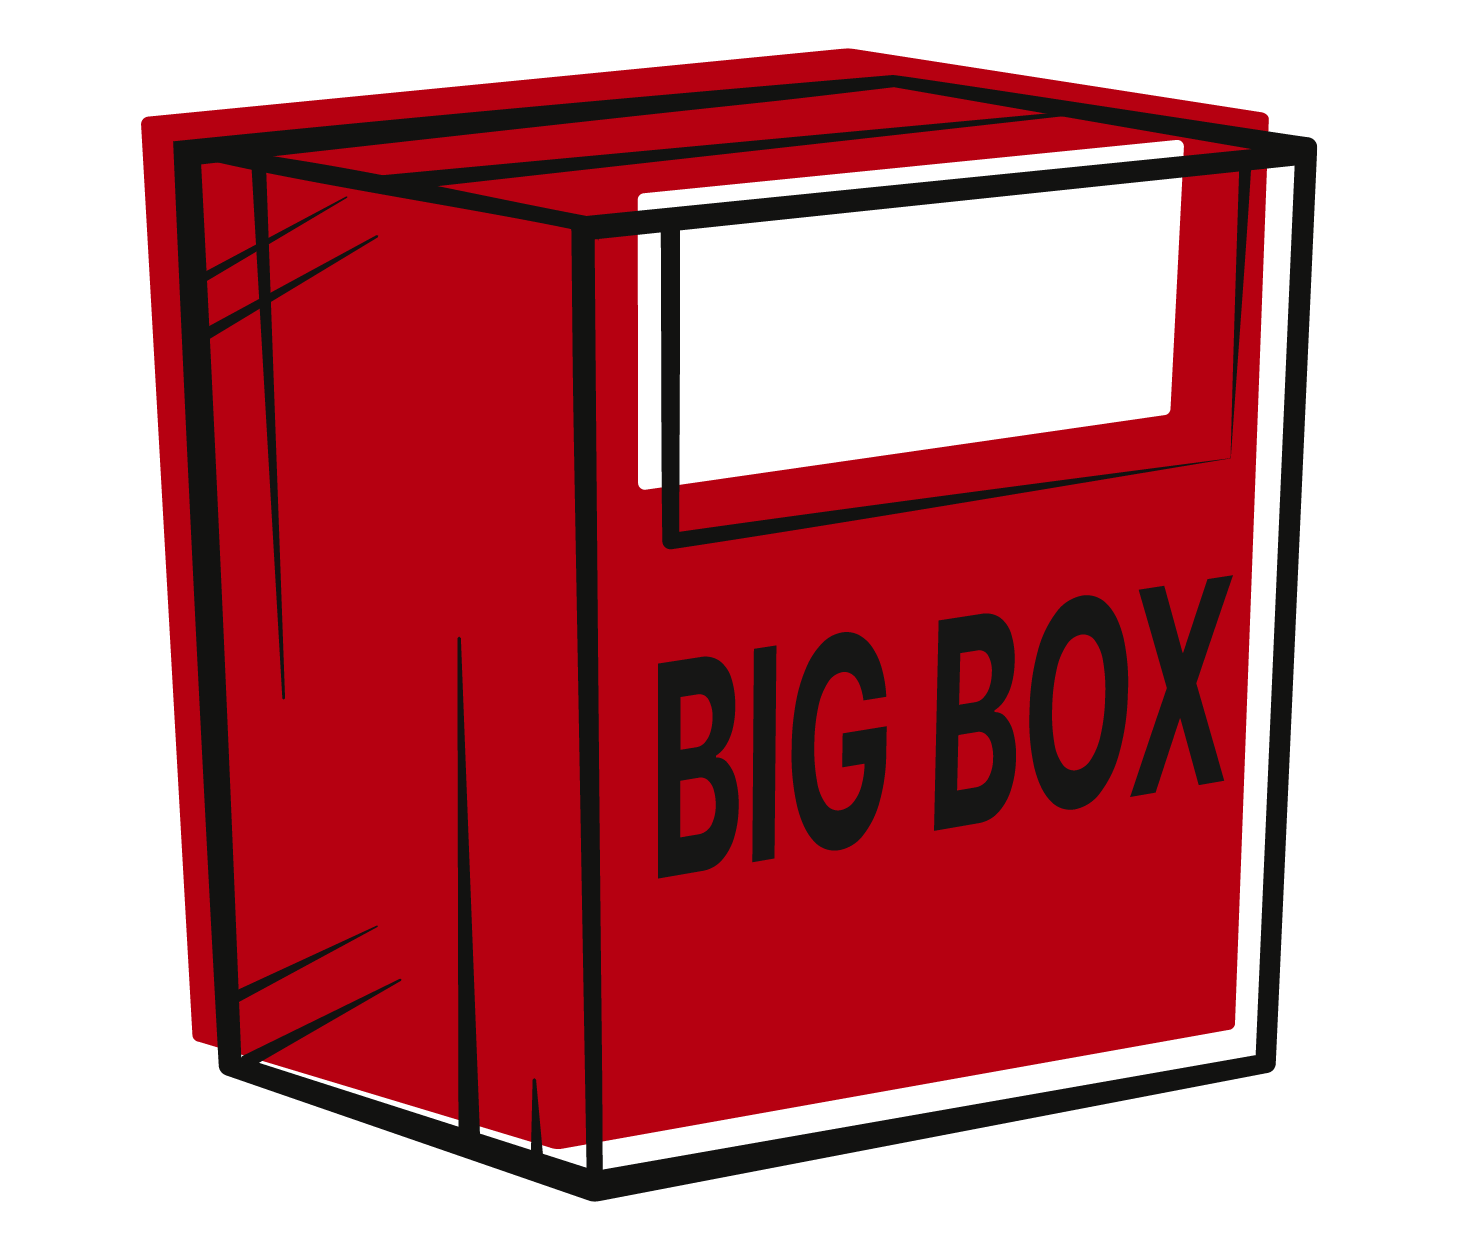 Red Box "Big Box"